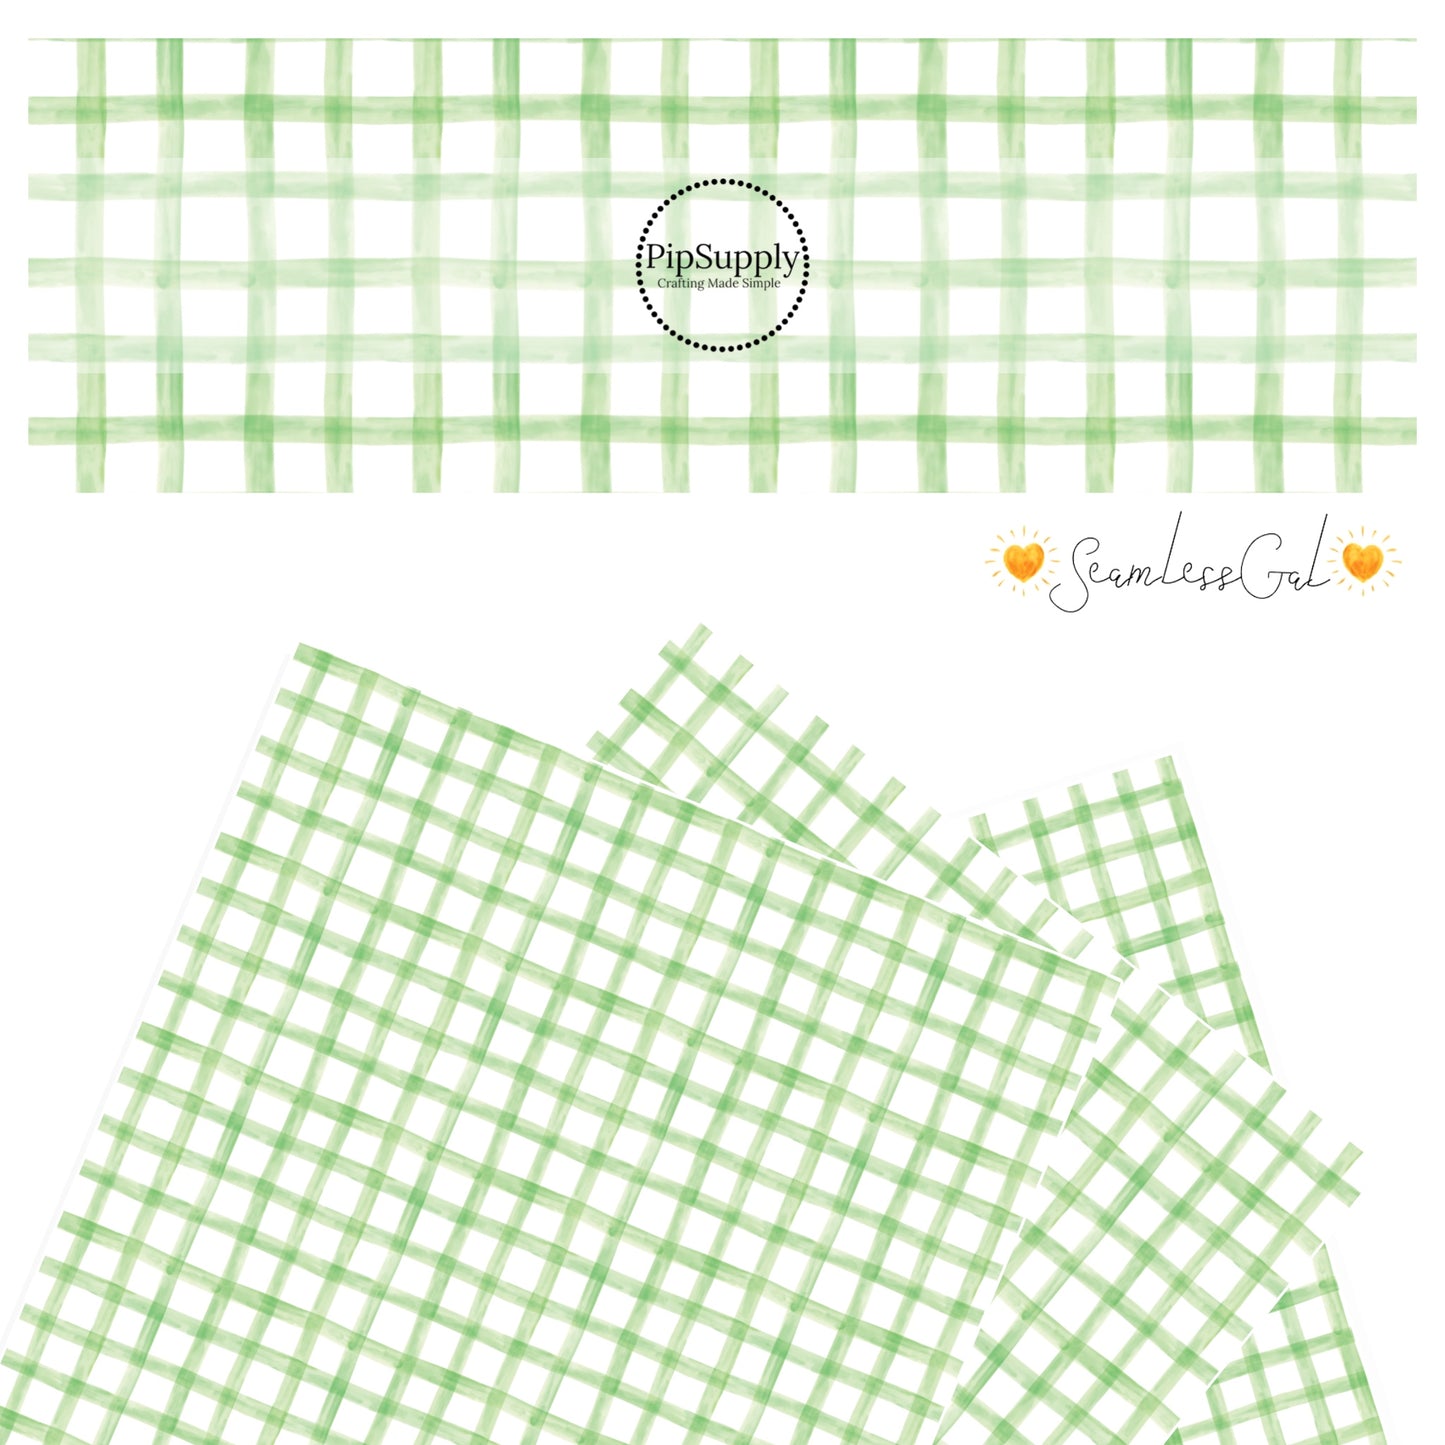 Mint green gingham pattern faux leather sheet.